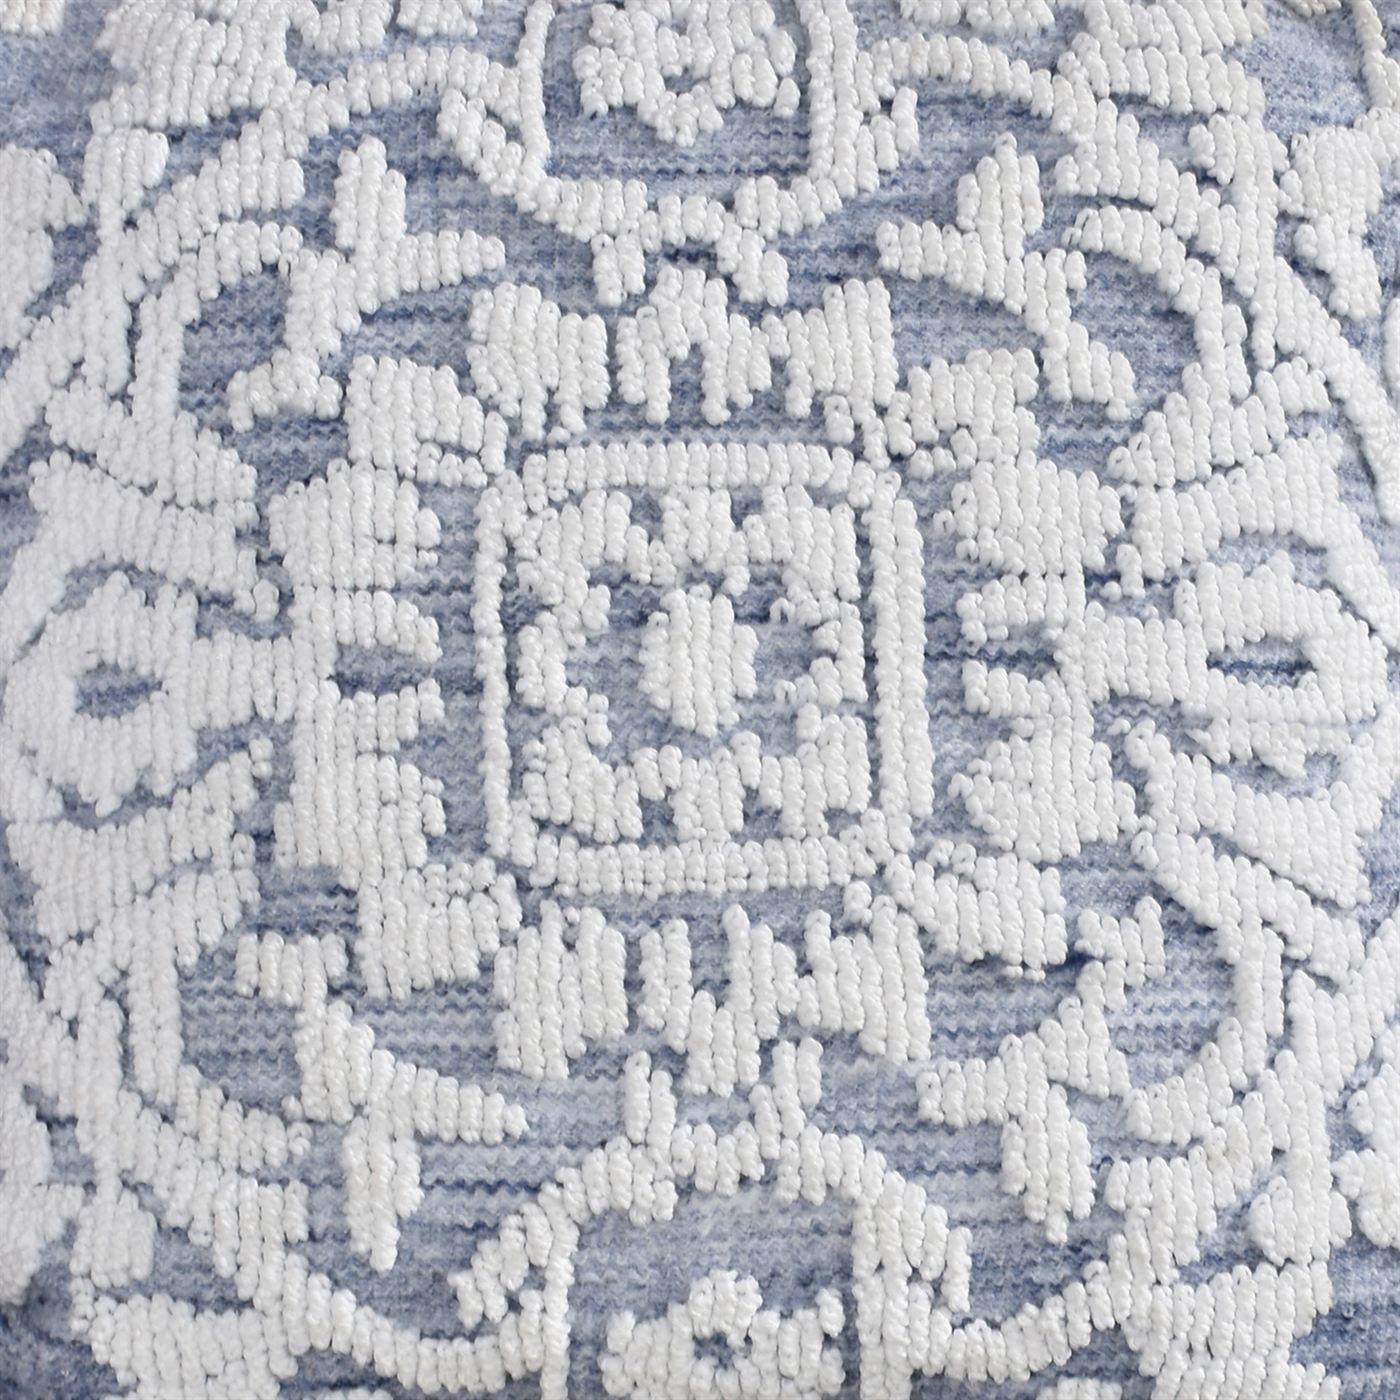 Vaclav-Ii Cushion, Pet, Micro Fiber, Blue, Natural White, Circular Knitting, All Loop